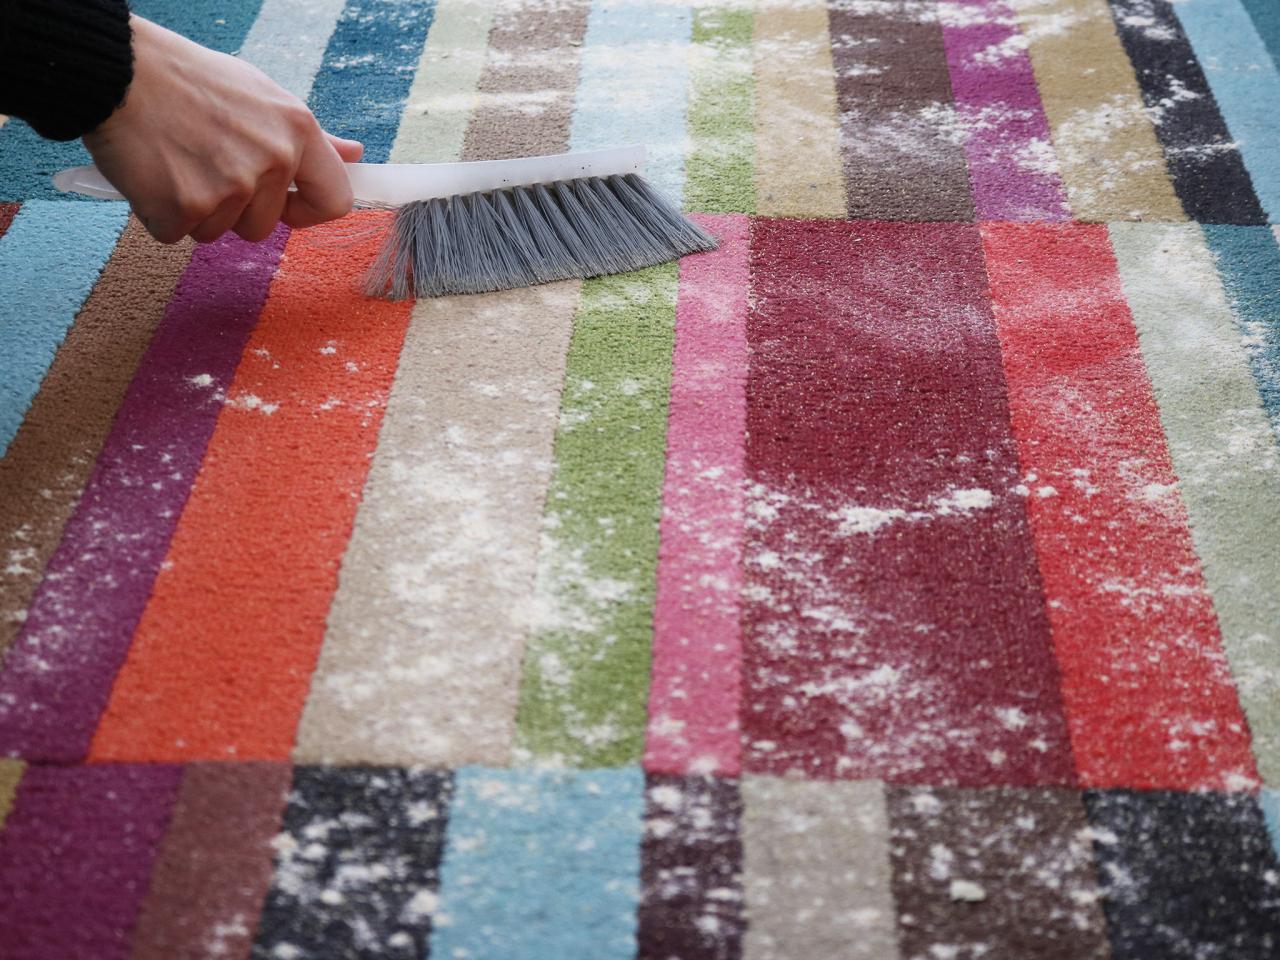 How to Make DIY Carpet Cleaner